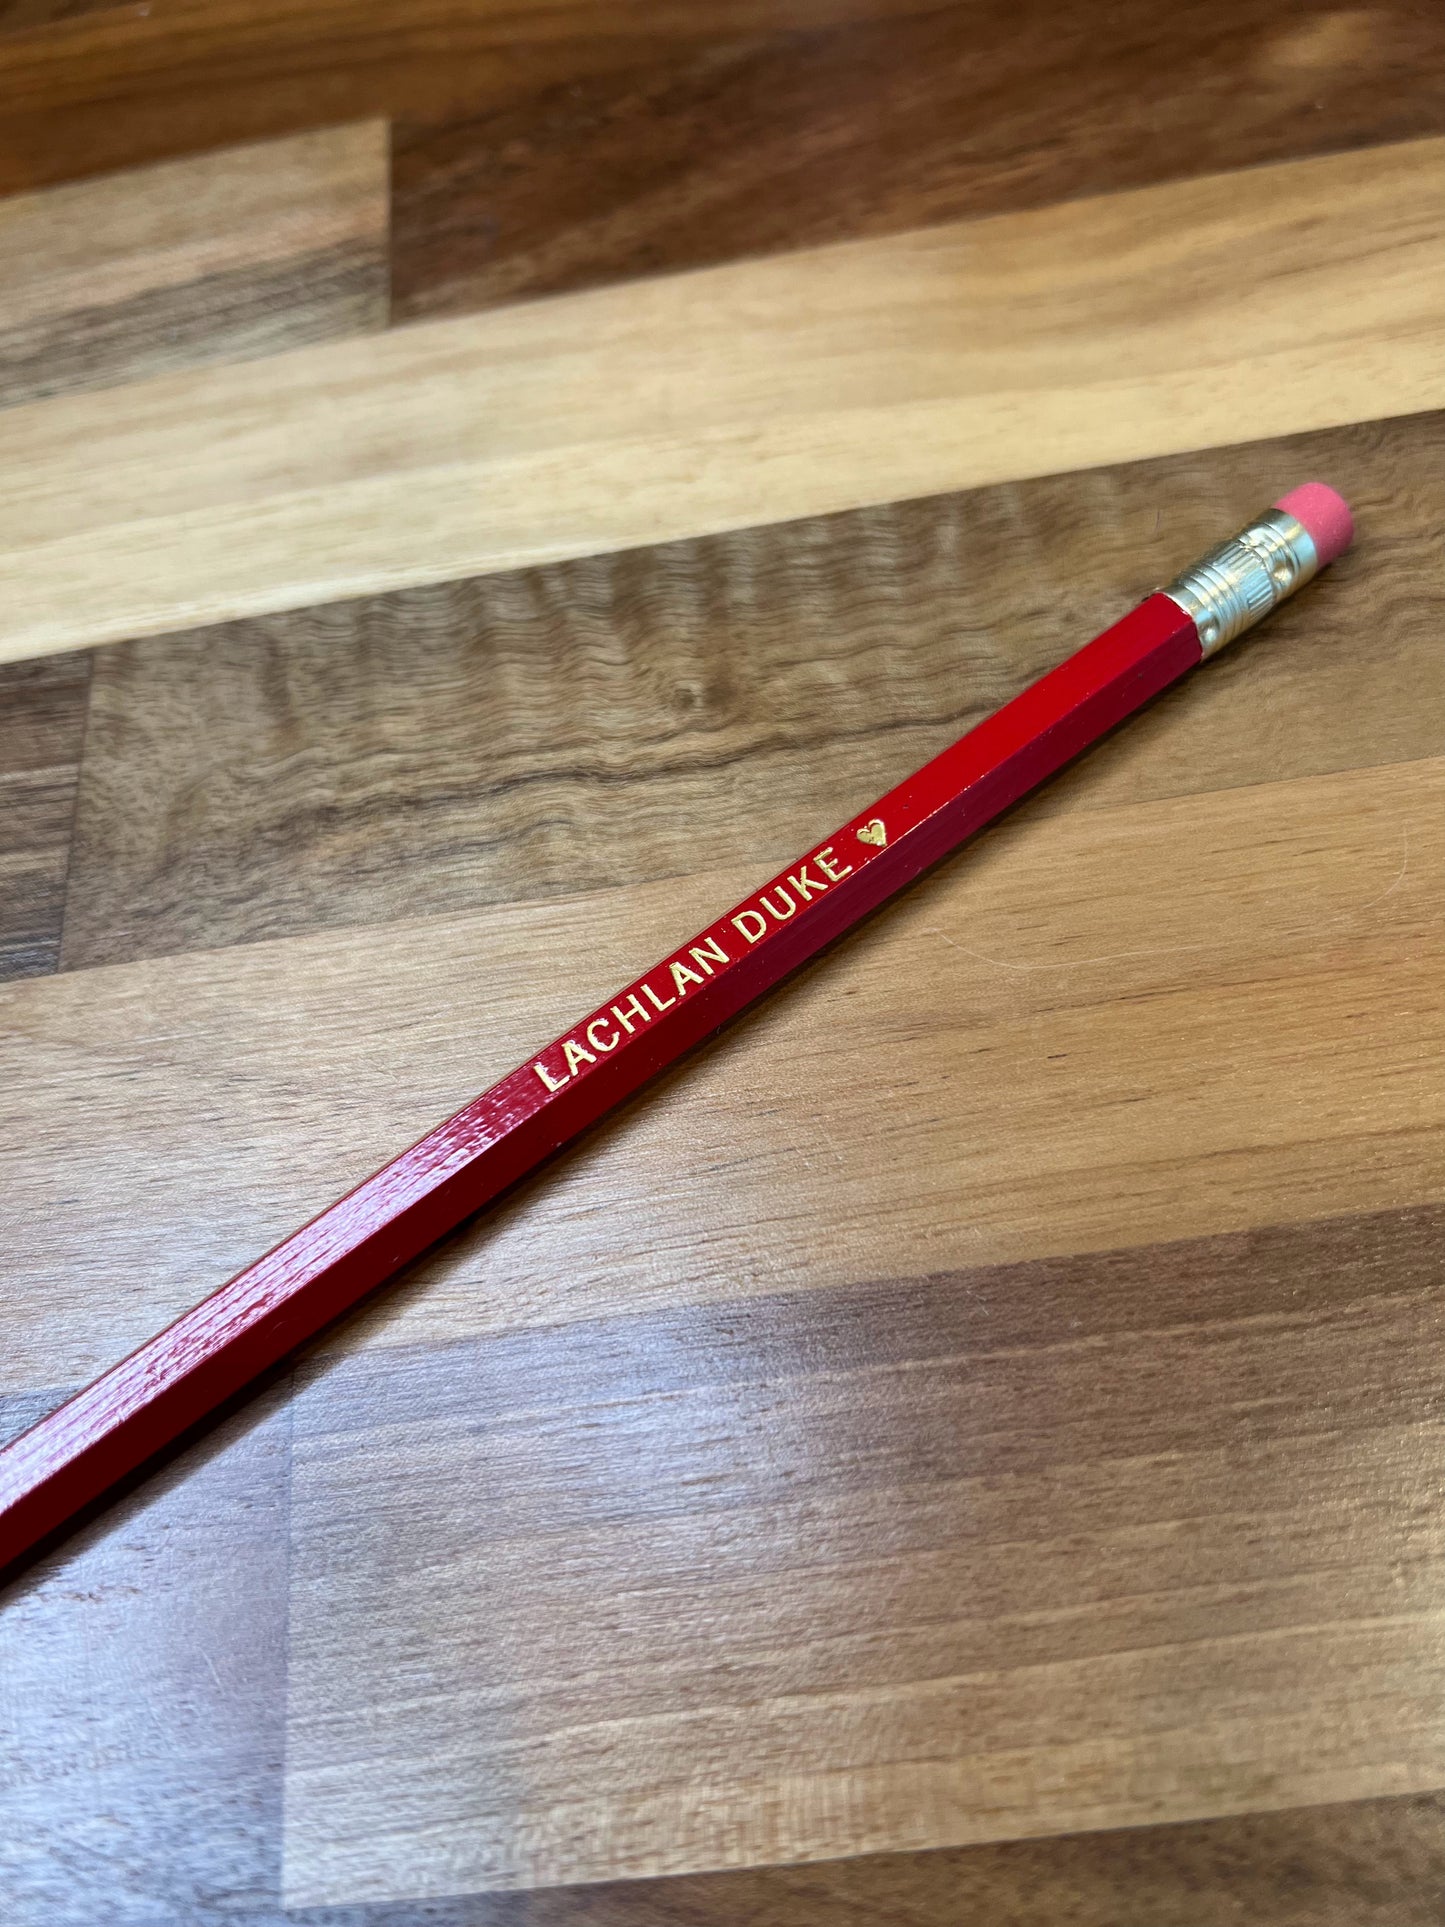 Lachlan Duke pencil